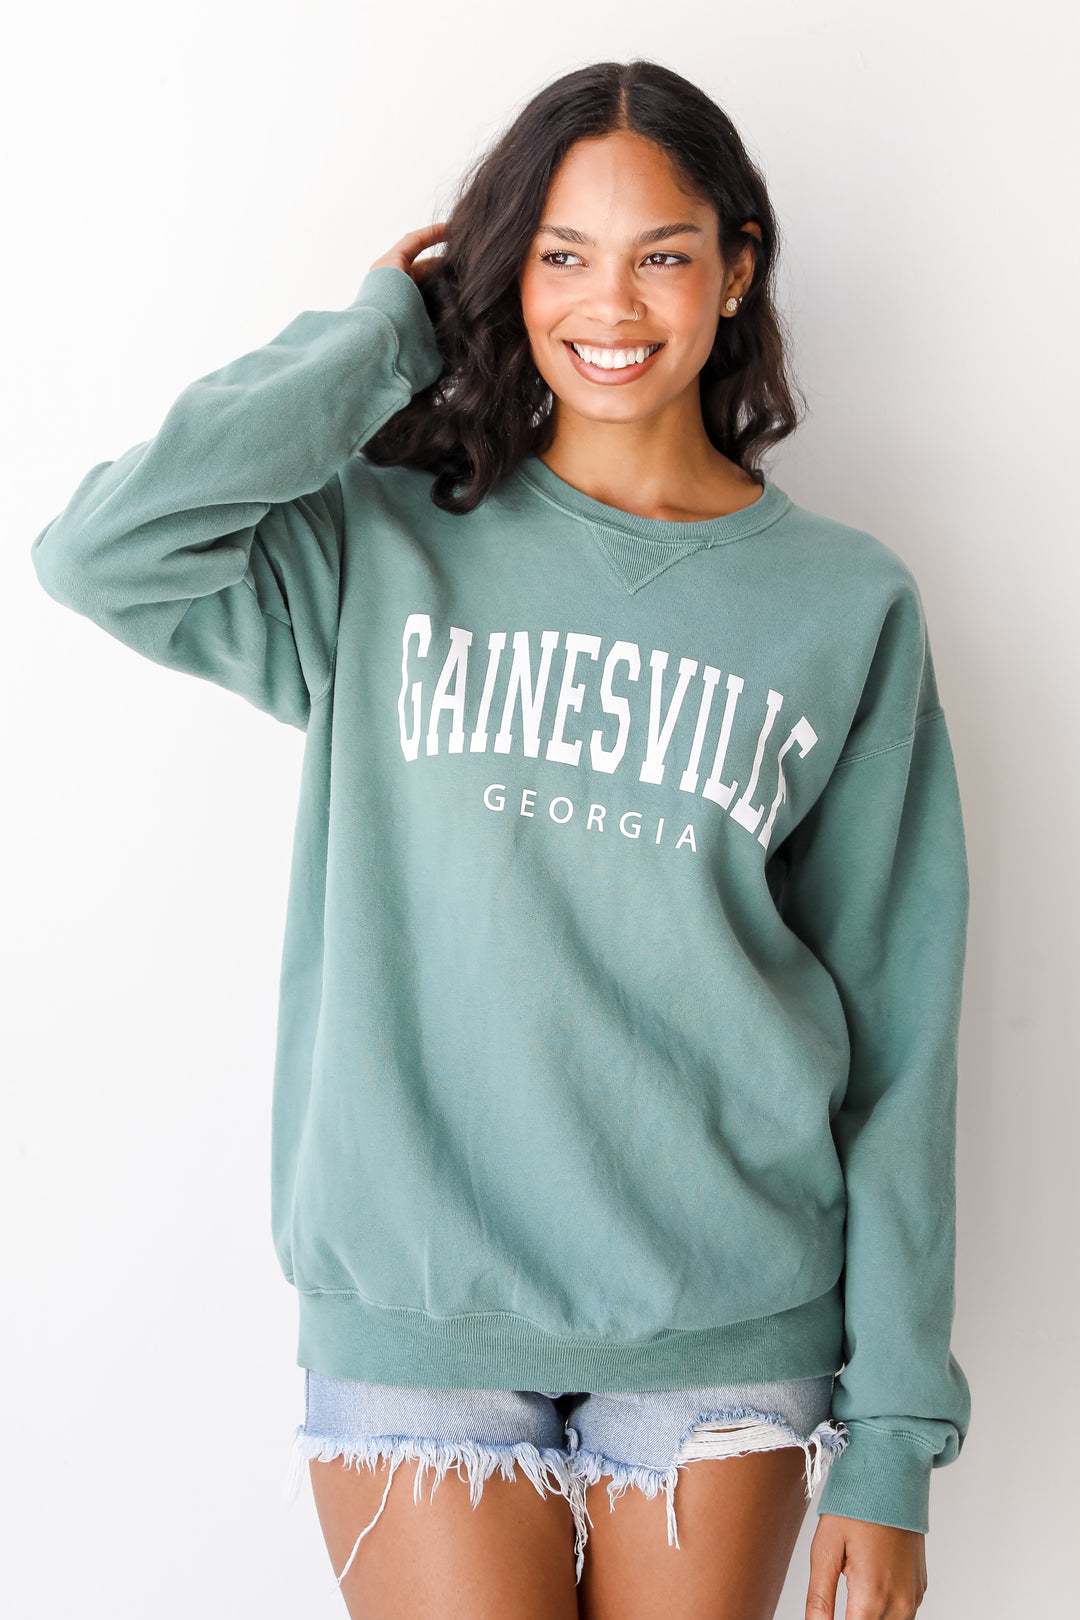 Seafoam Gainesville Georgia Sweatshirt. Graphic Sweatshirt. Oversized Comfy Sweatshirt